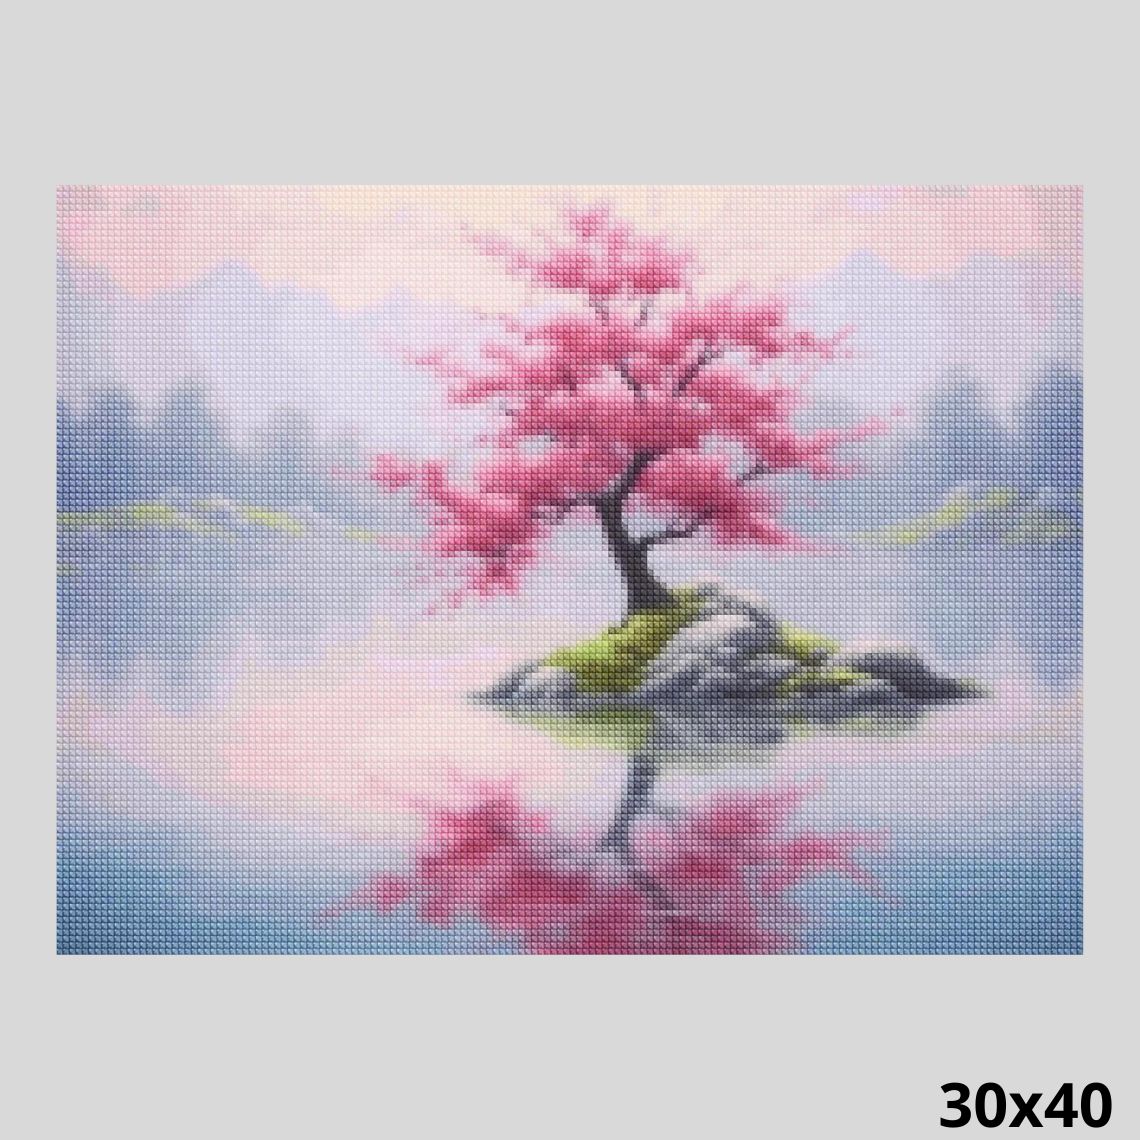 Wonderful Blooming Cherry Tree 30x40 - Diamond Art